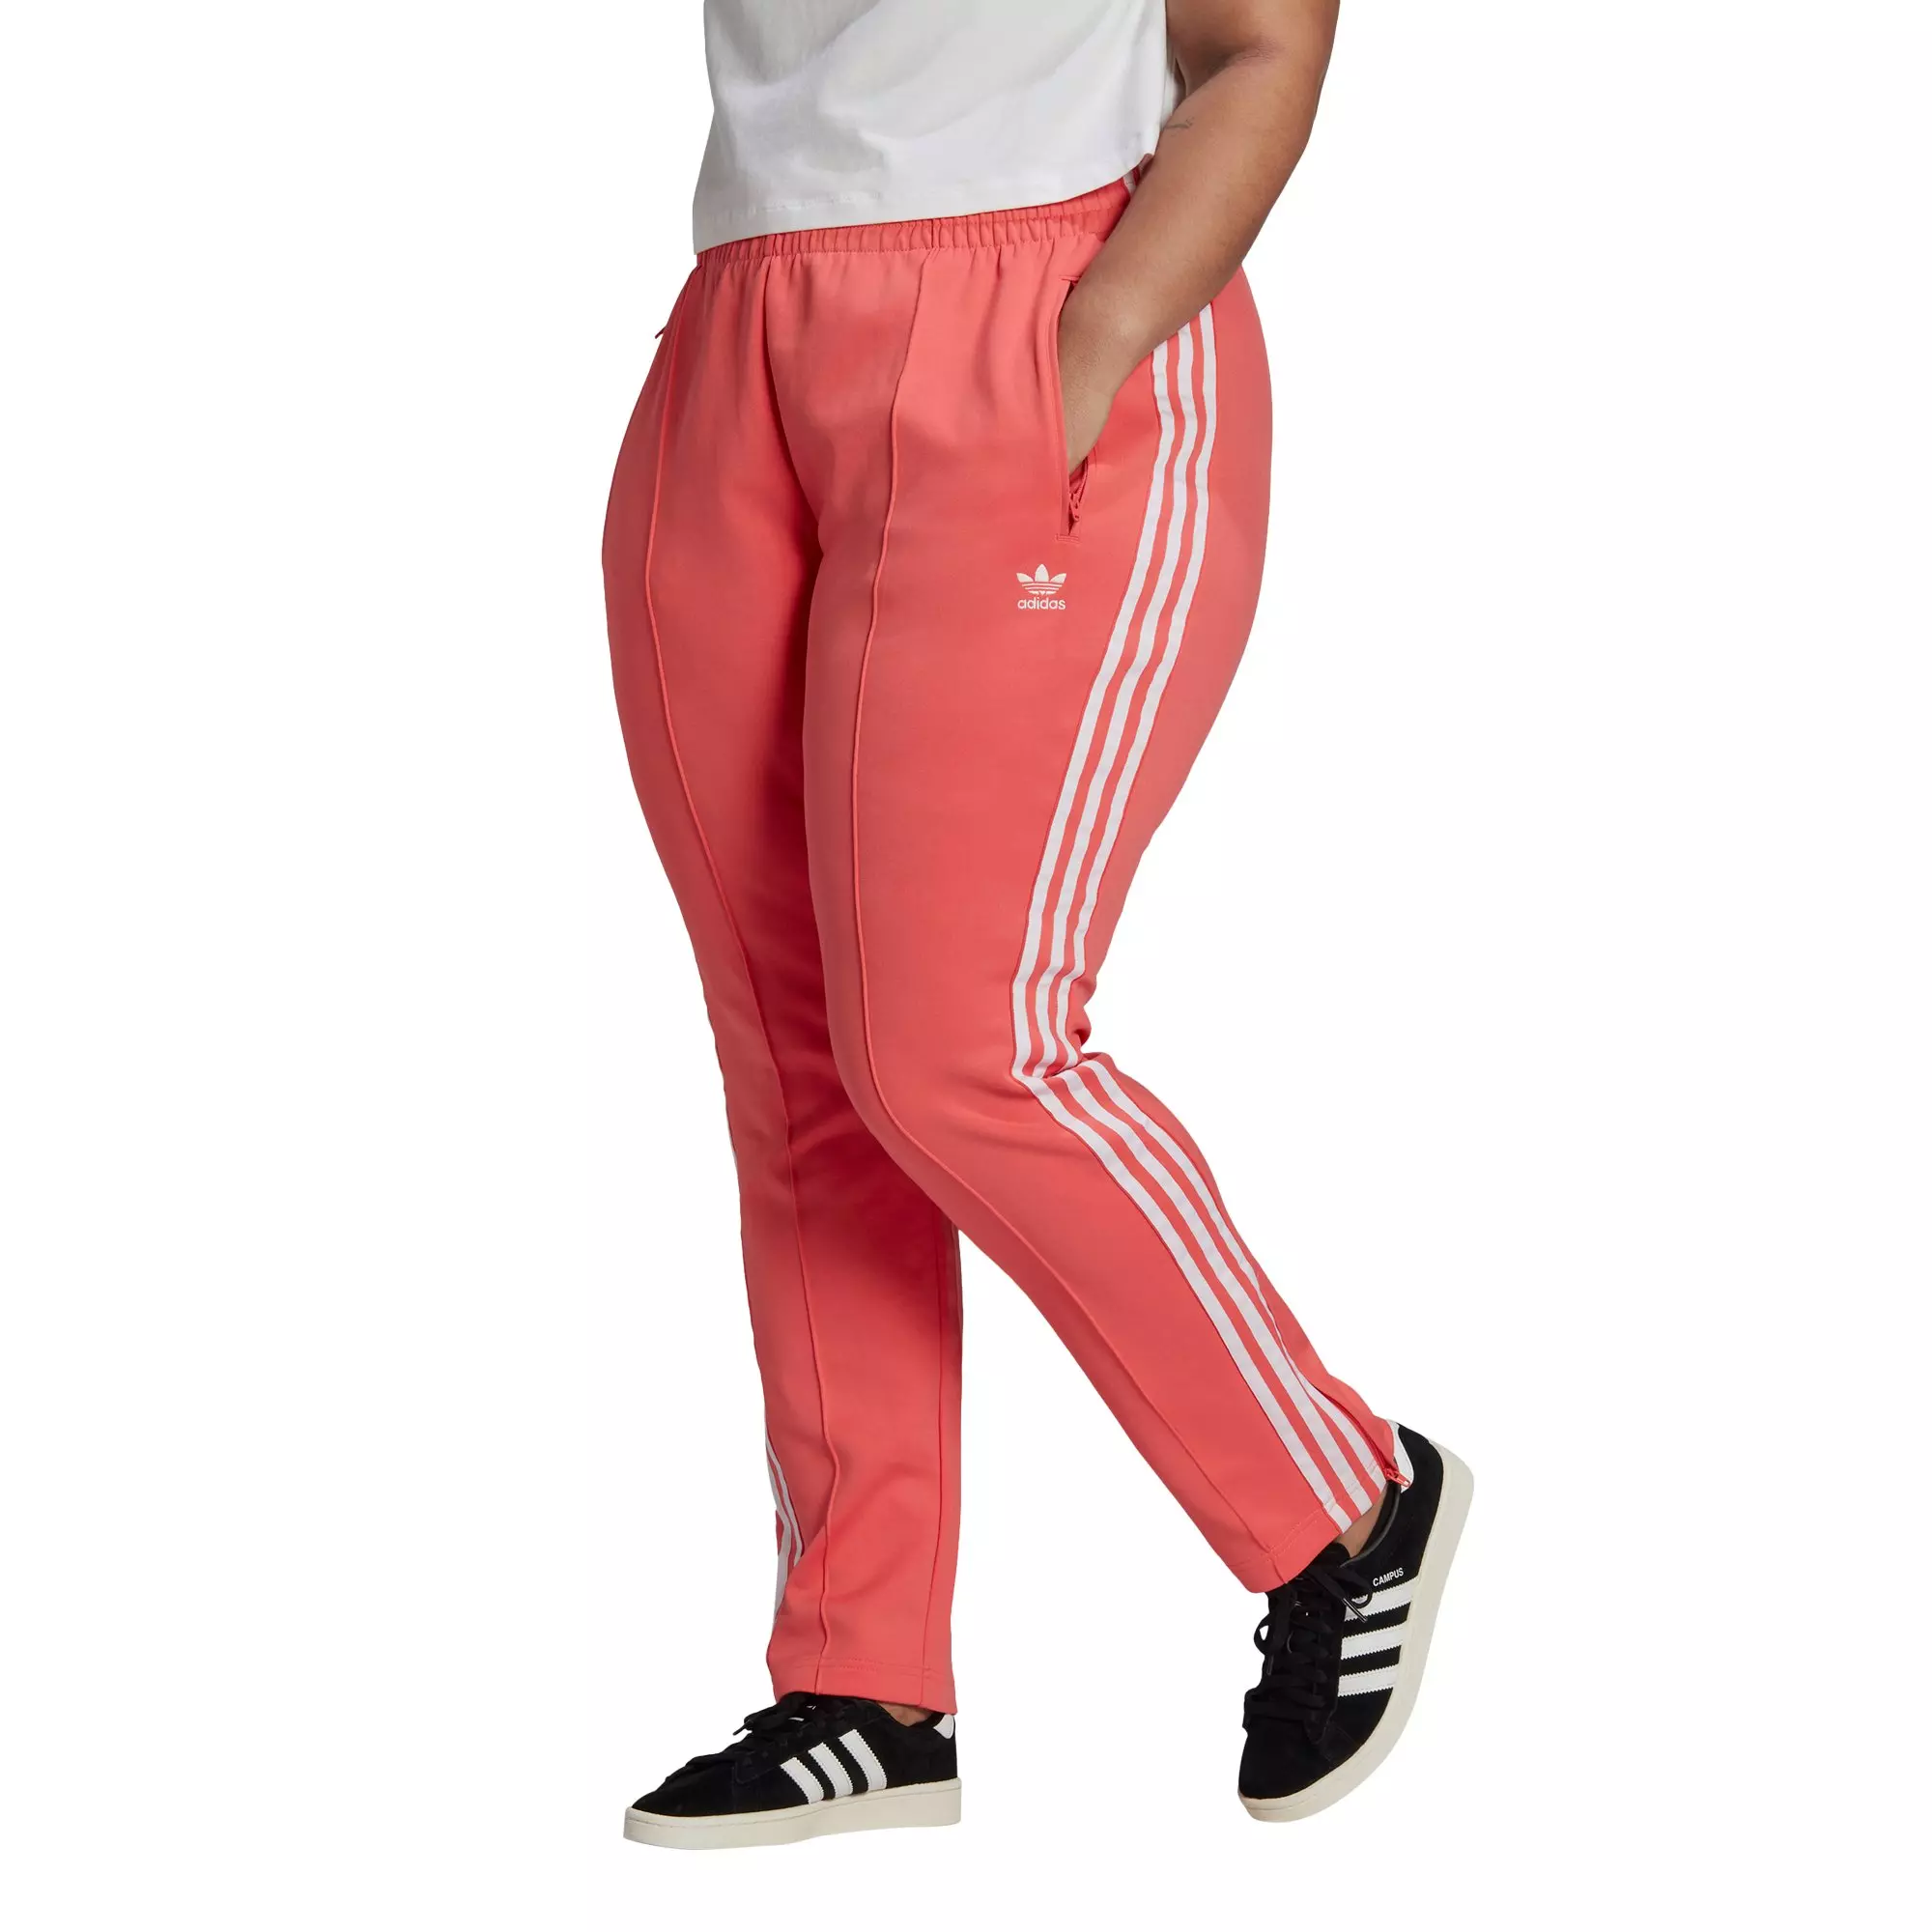 Adidas / Originals Women's Primeblue Superstar Track Pants